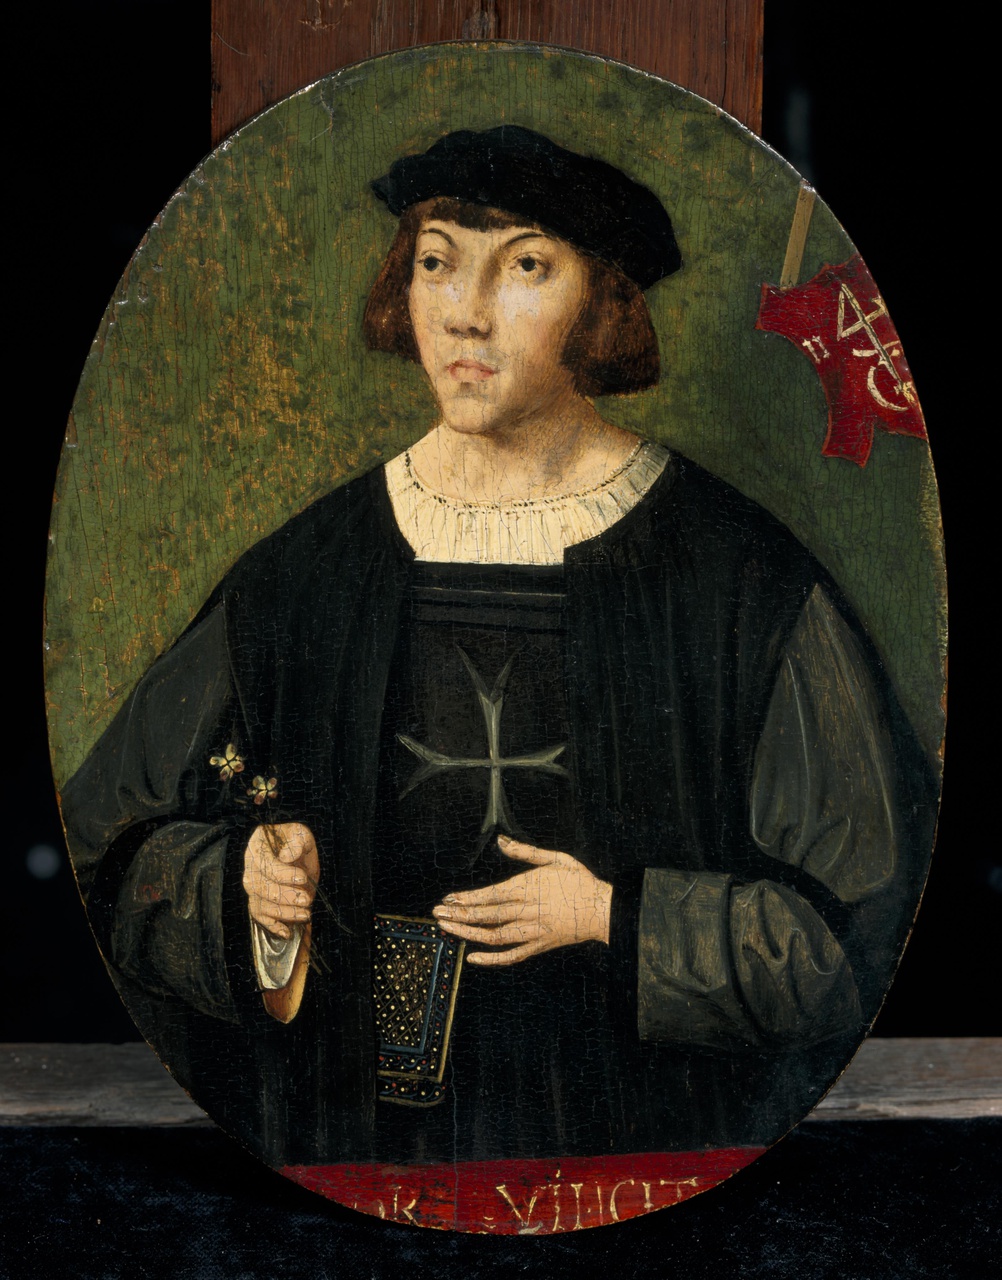 Portret van een Johanniter ridder